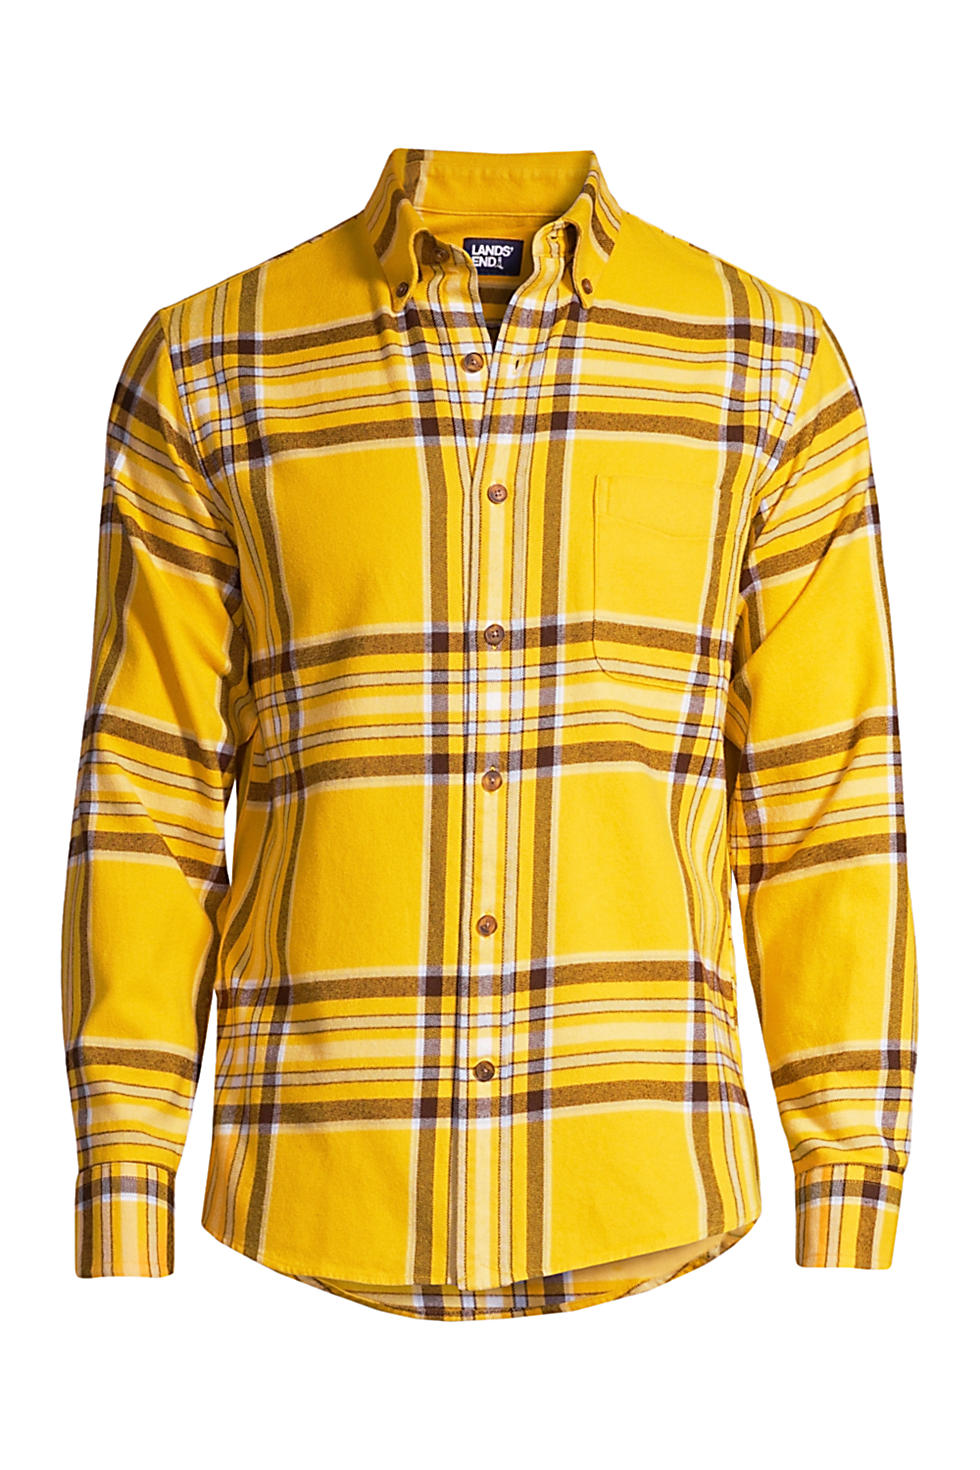 Lands End Men's Traditional Fit Pattern Flagship Flannel Shirt